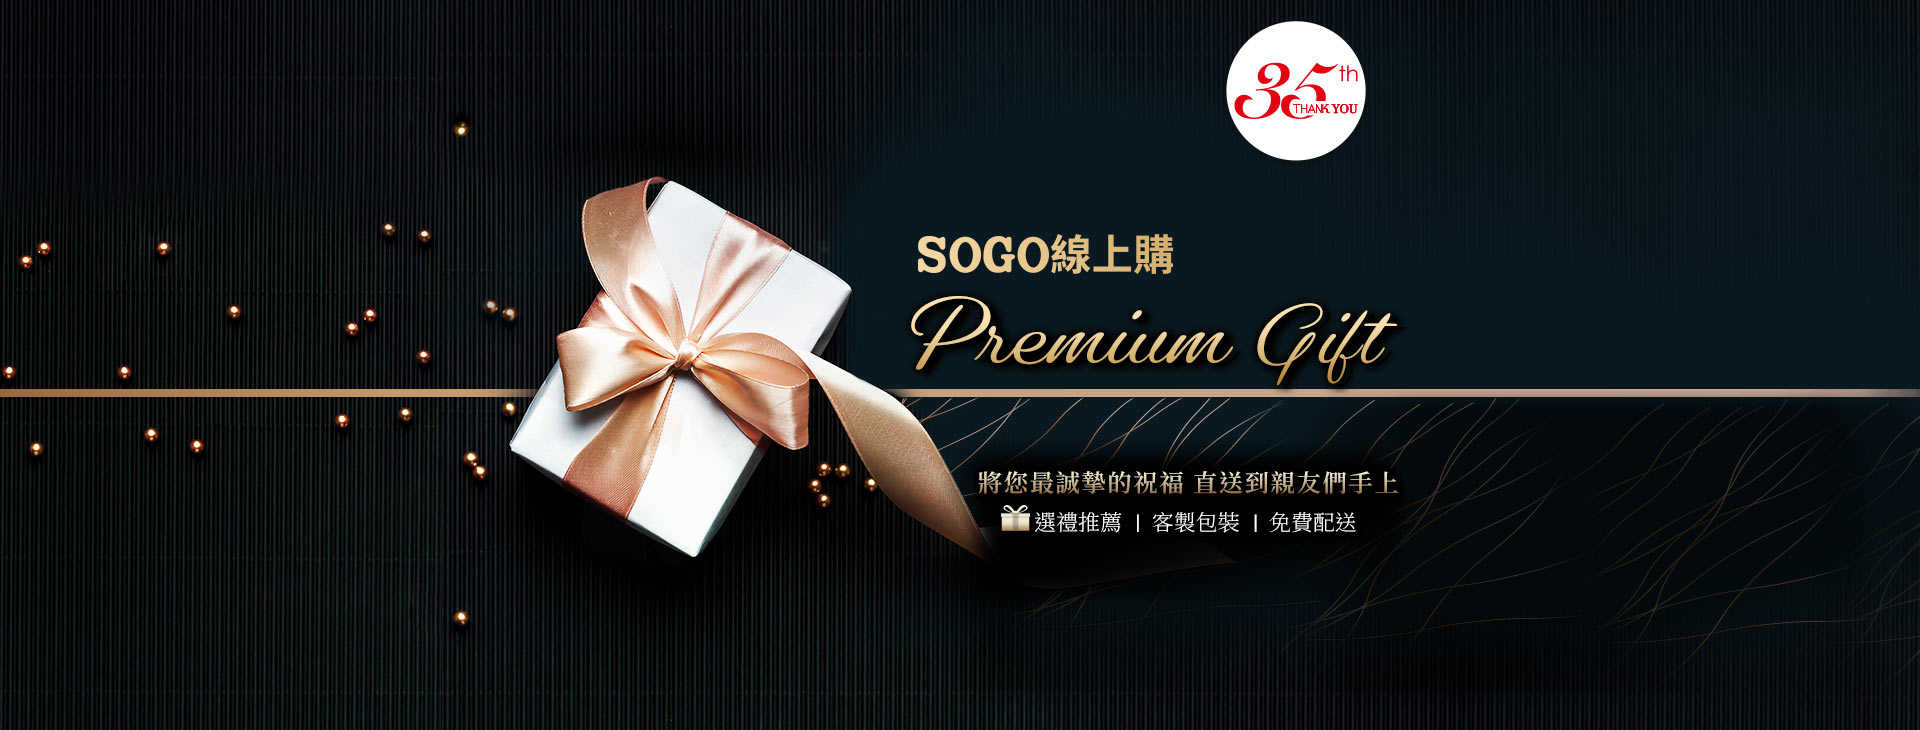 SOGO線上購 Premium Gift服務